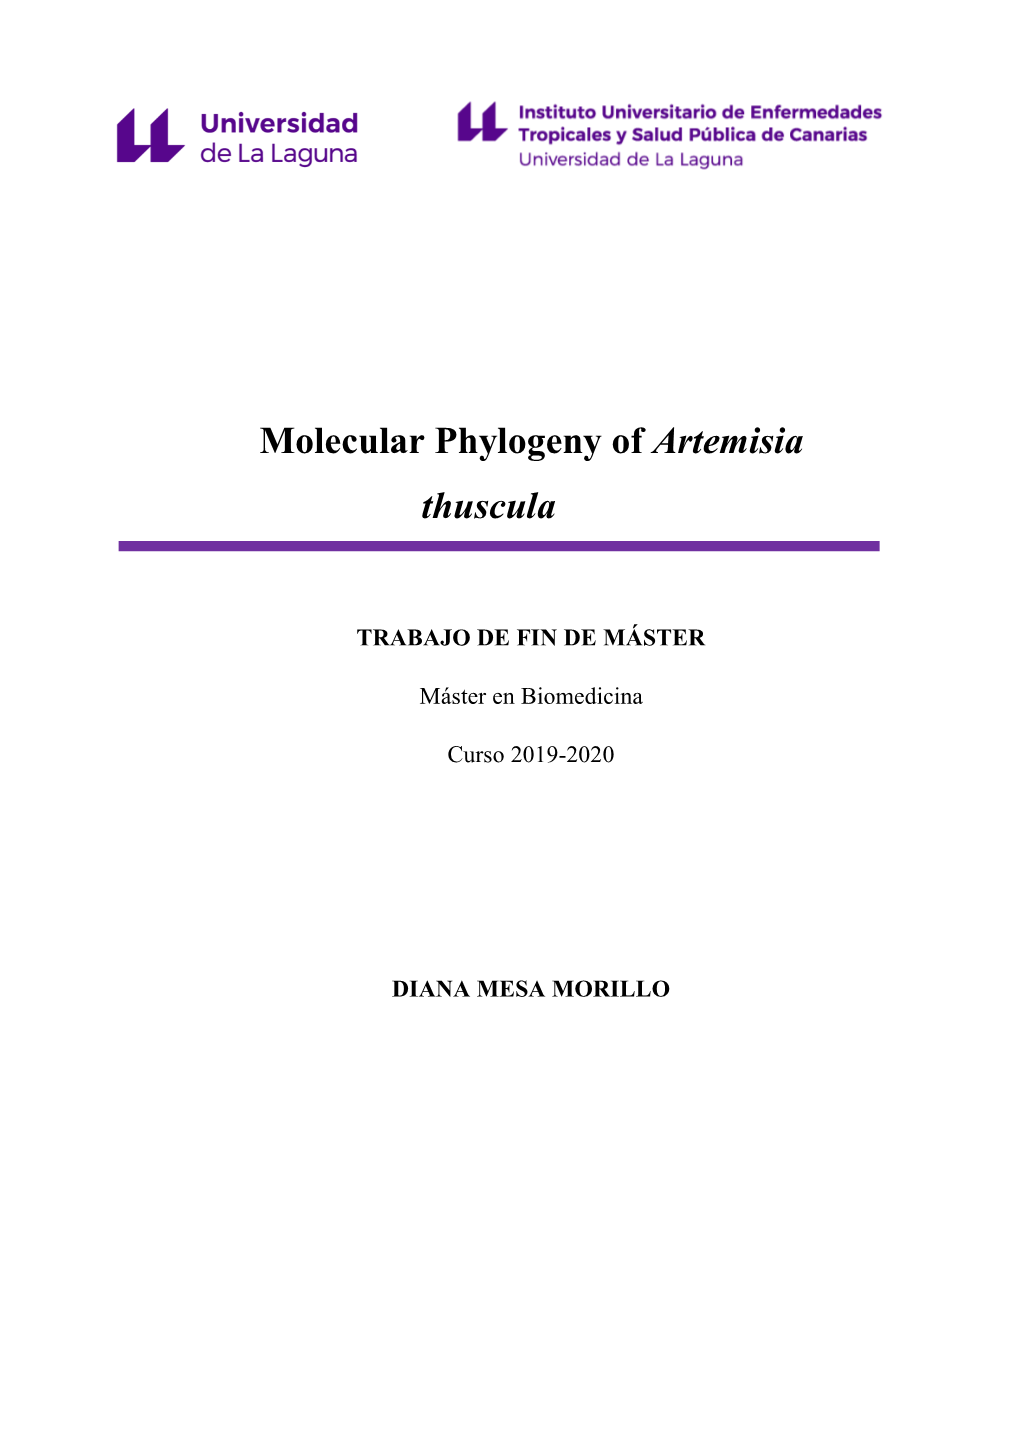 Molecular Phylogeny of Artemisia Thuscula